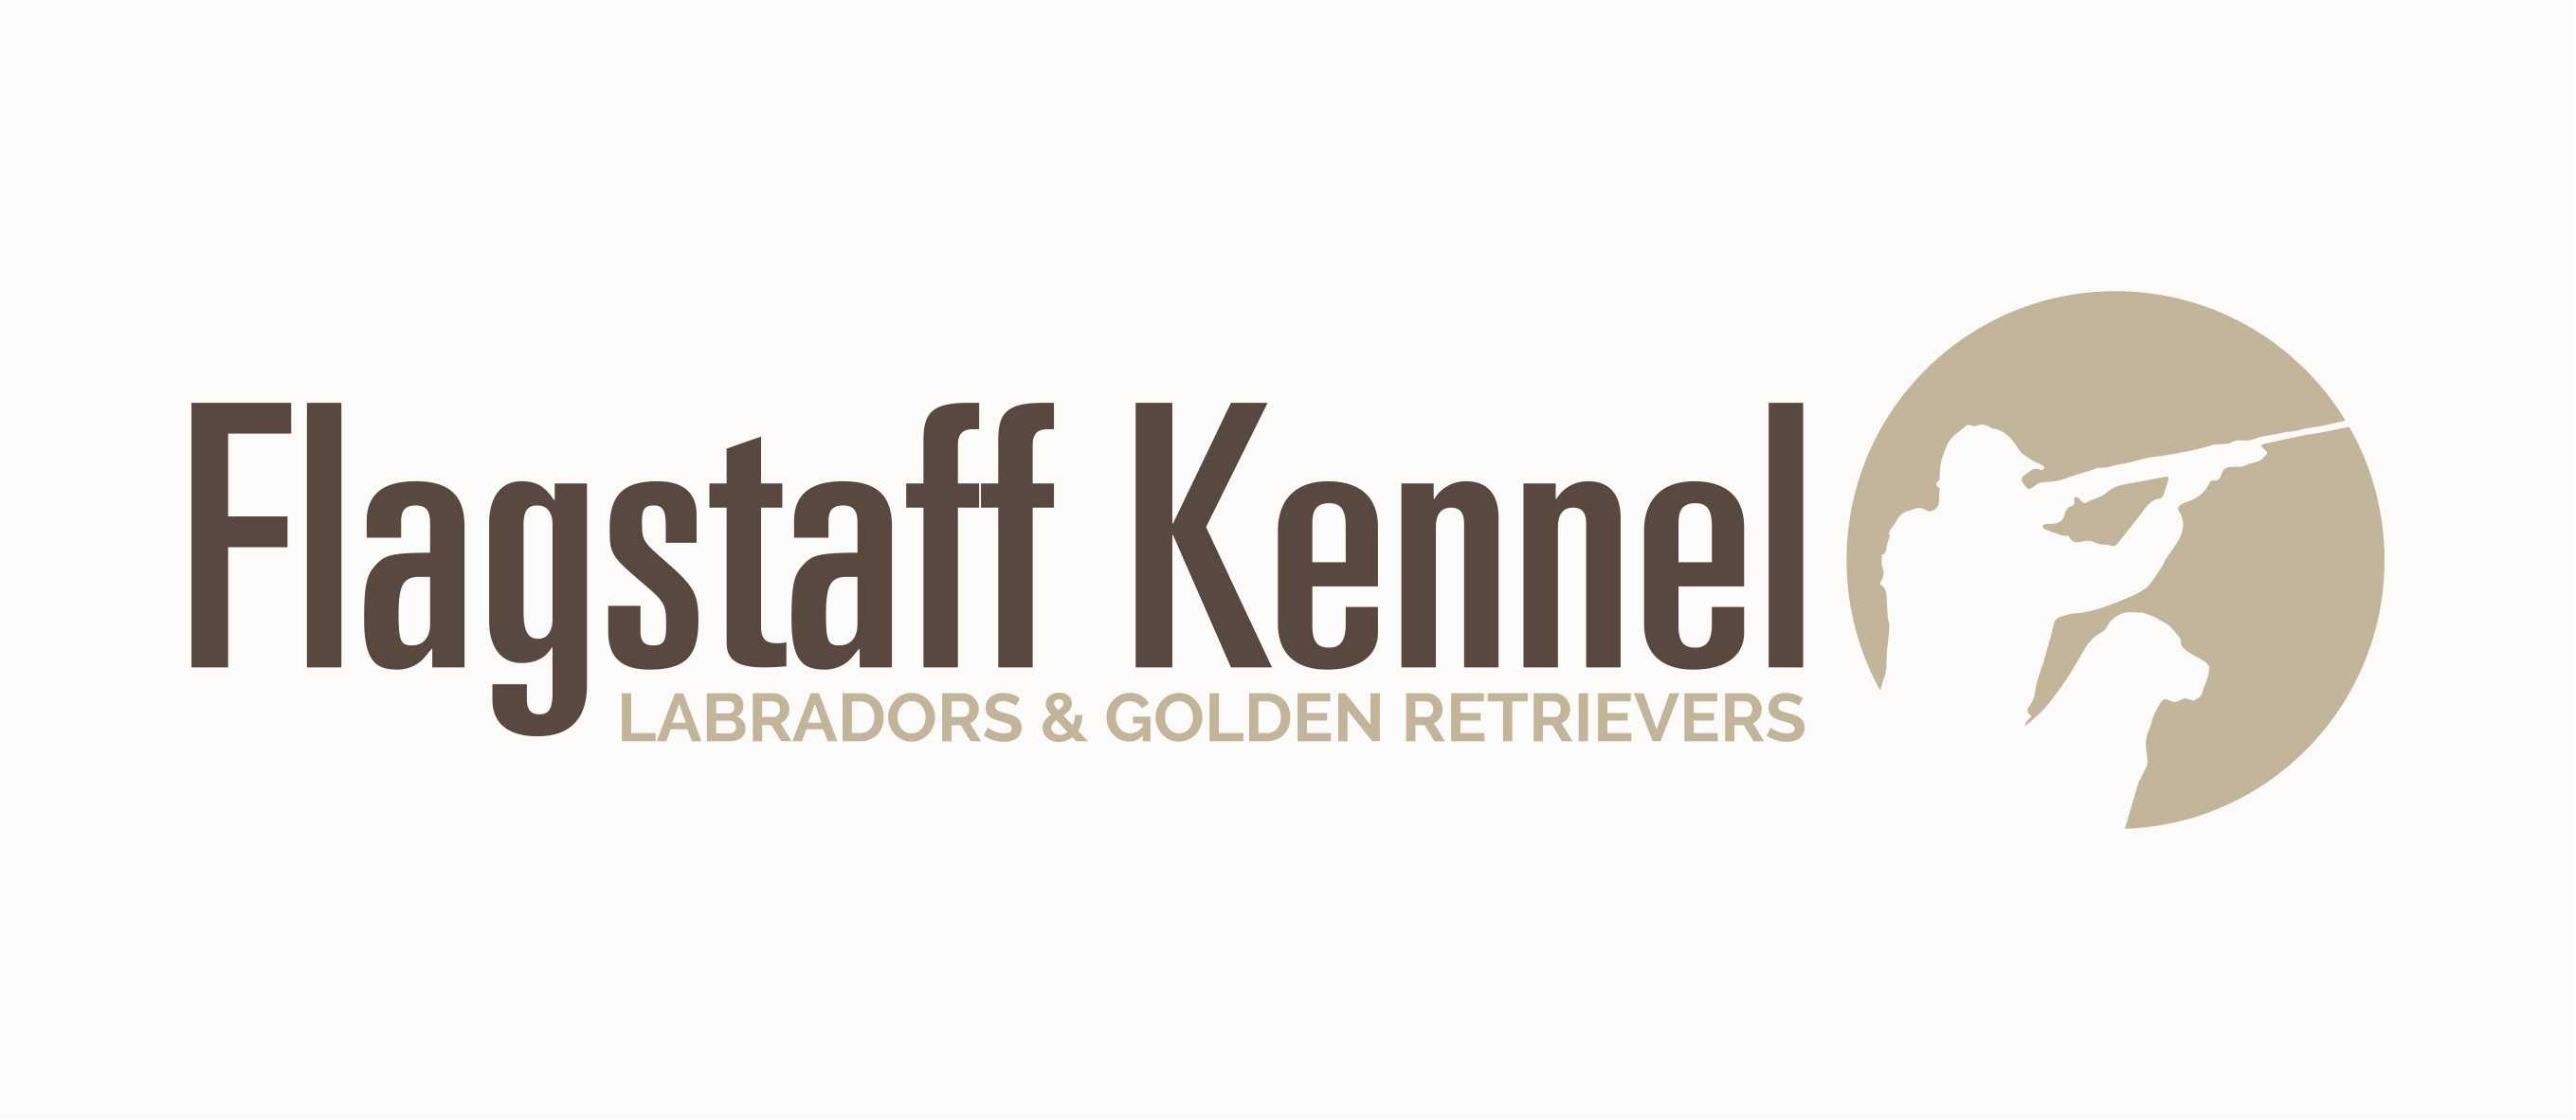 Flagstaff Kennels